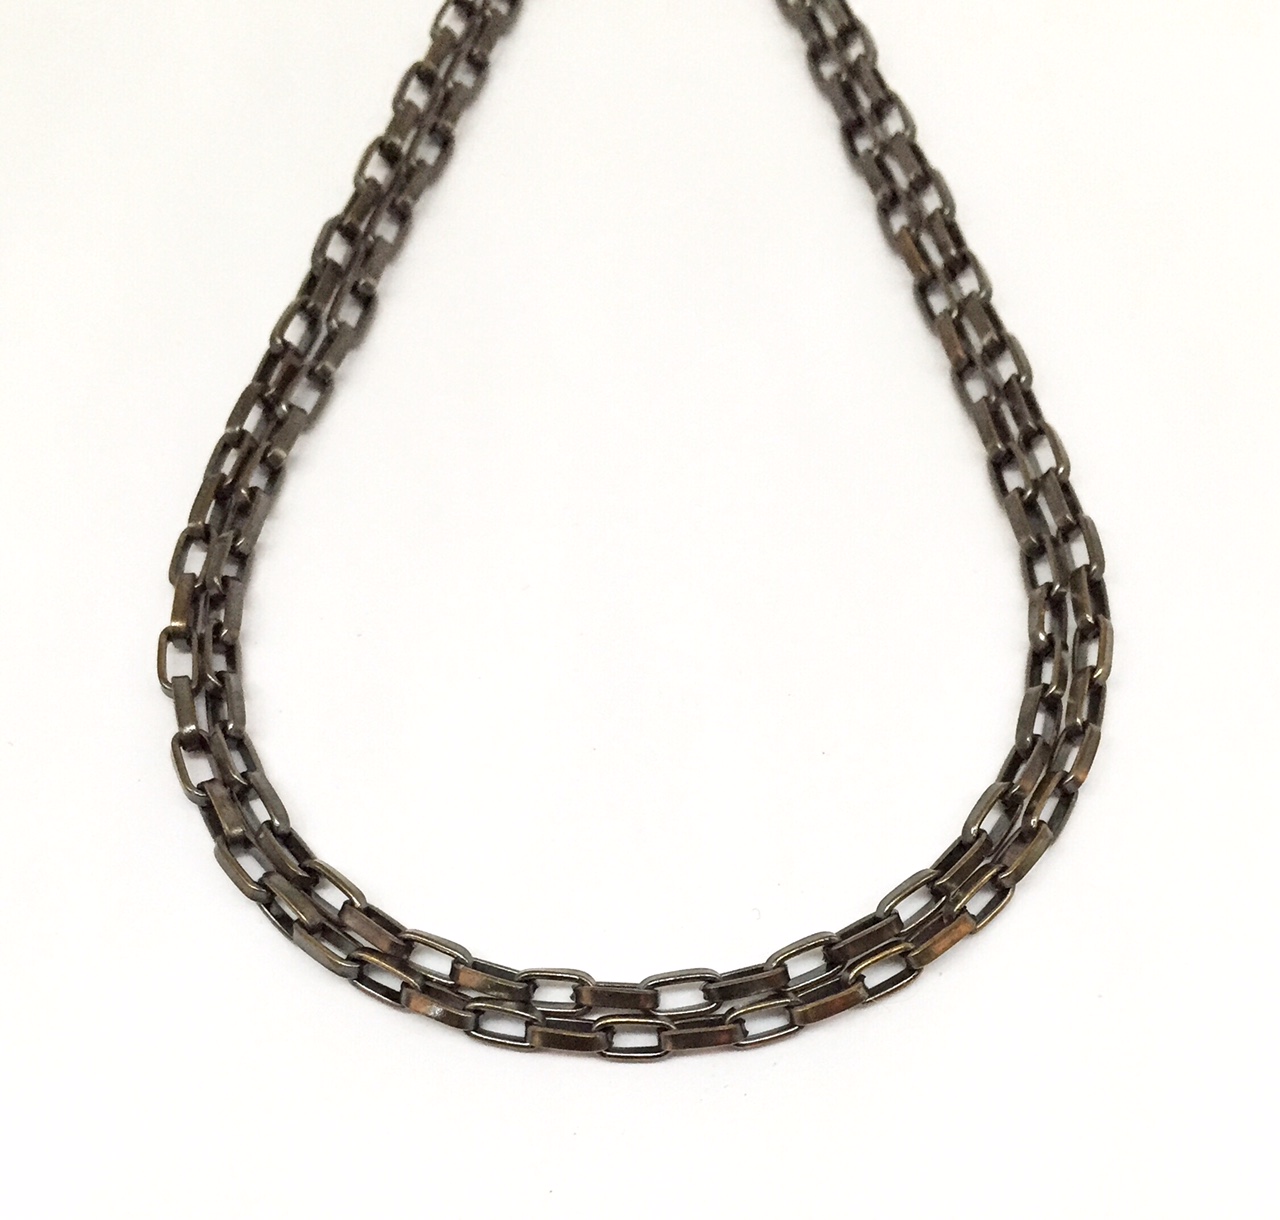 Bronze Karyn Chopik chain | Effusion Art Gallery + cast Glass Studio, Invermere BC